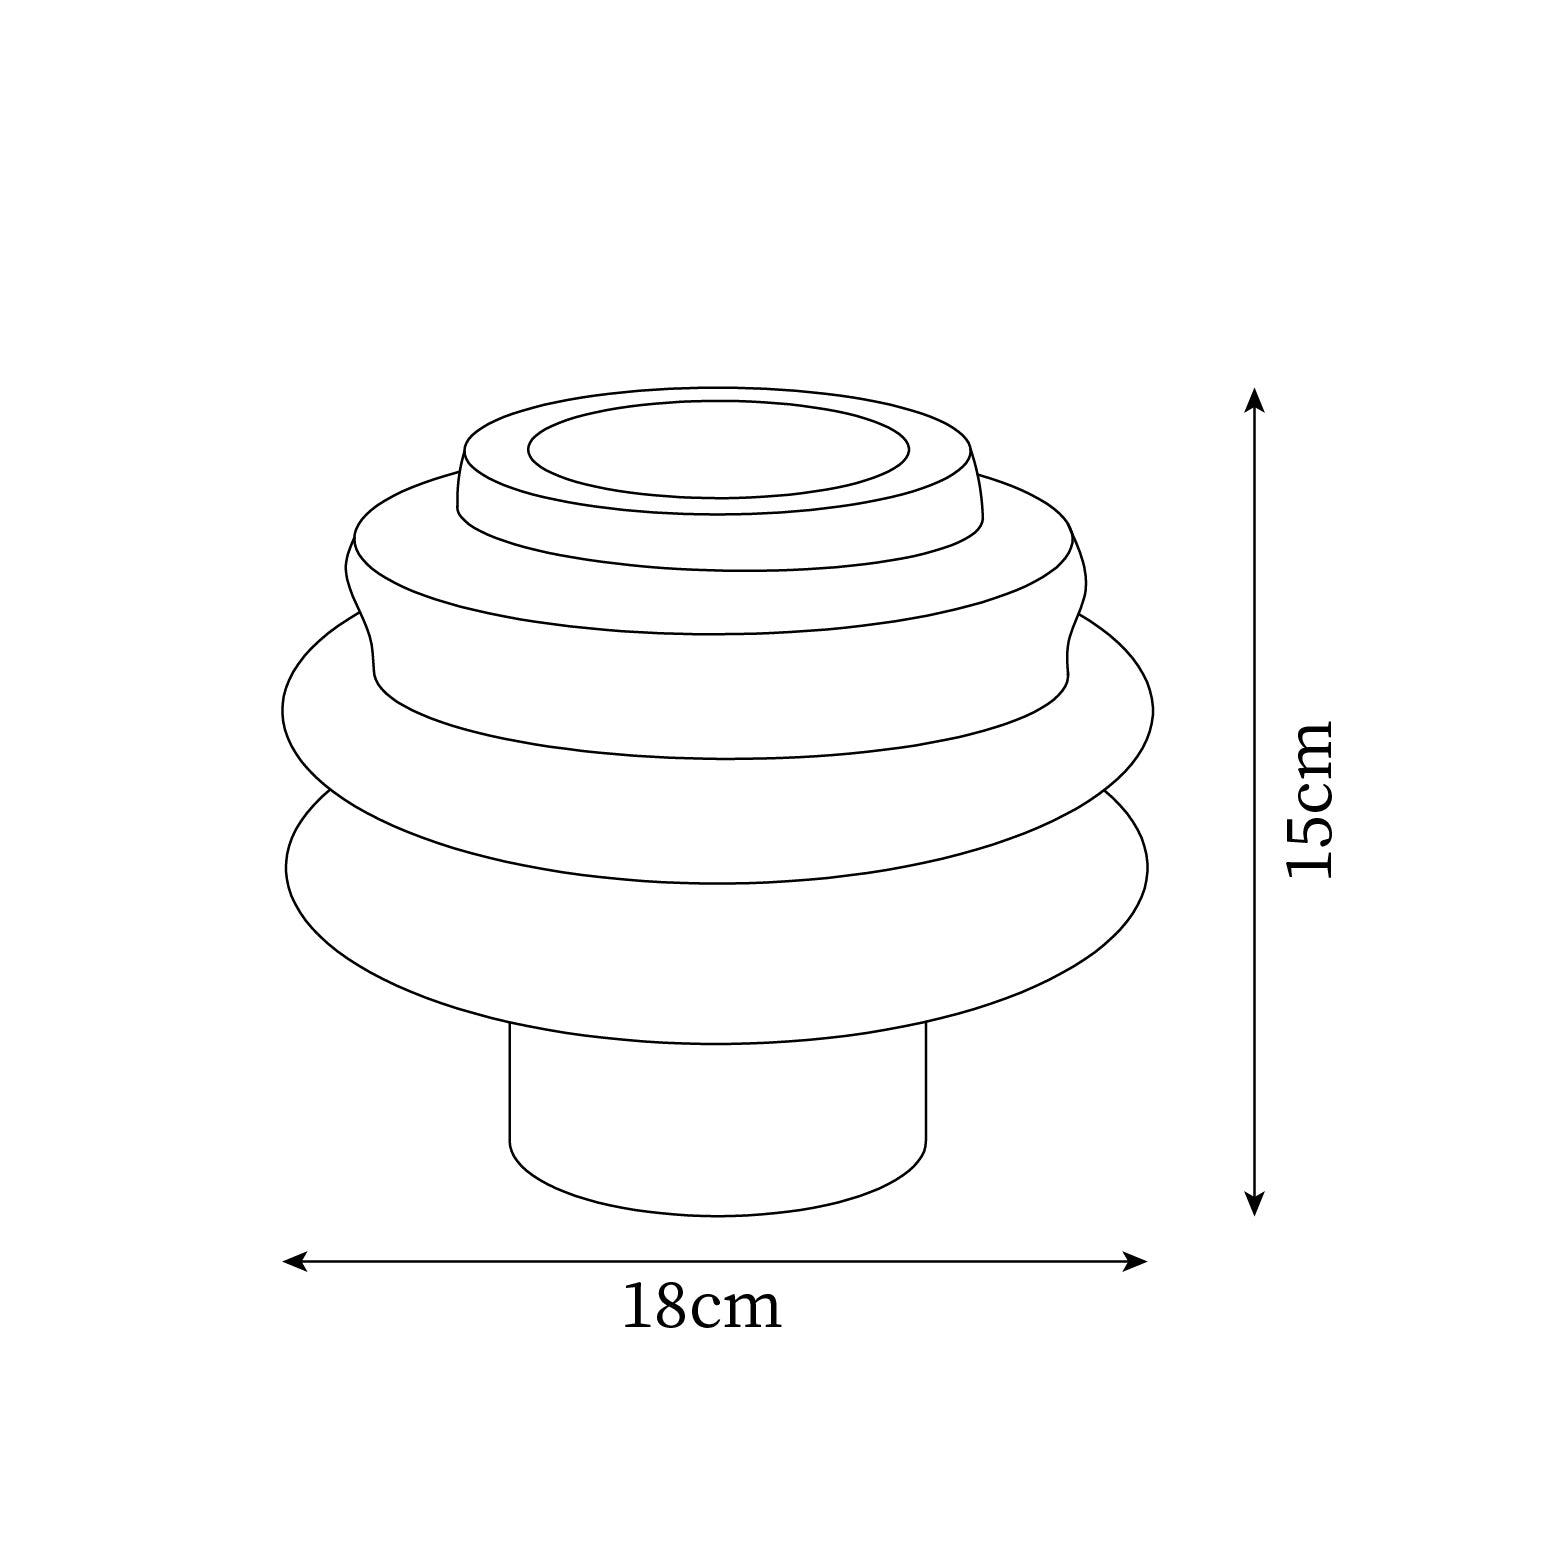 Water Drop Table Lamp 7″- 5.9″ - Docos